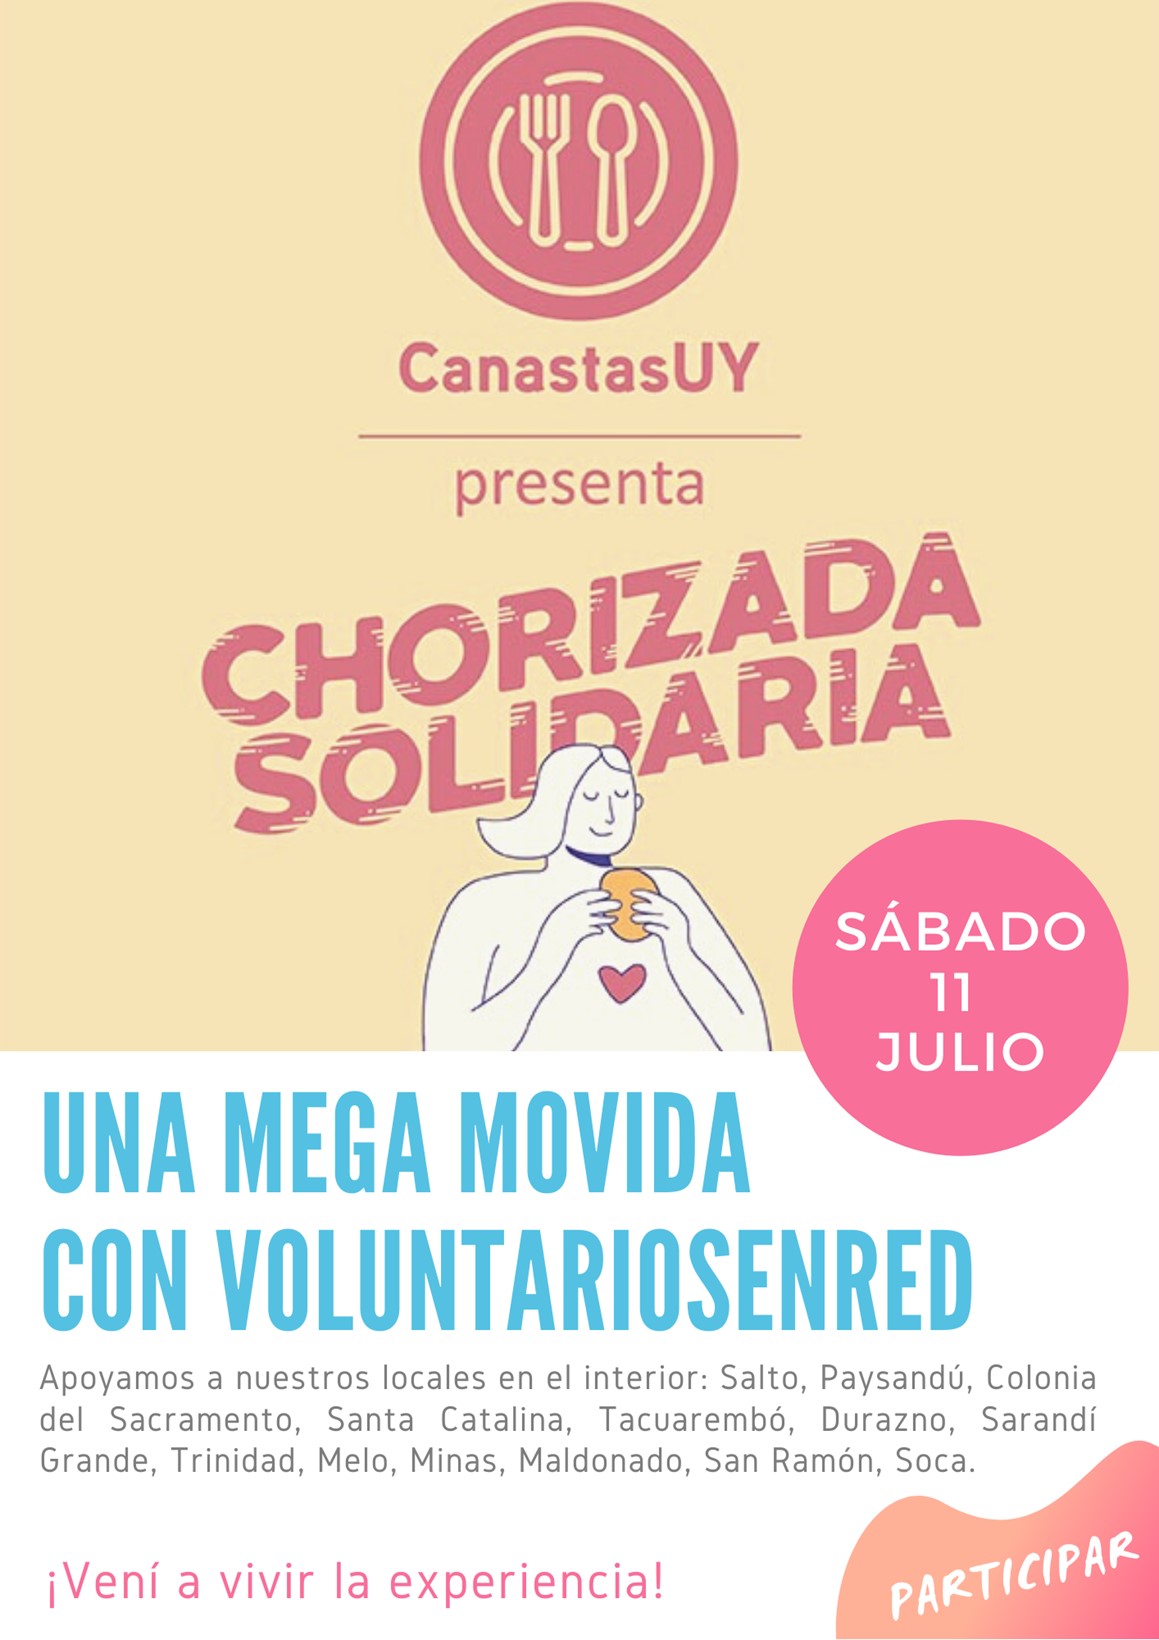 Redpagos se suma a la chorizada solidaria organizada por CanastasUy